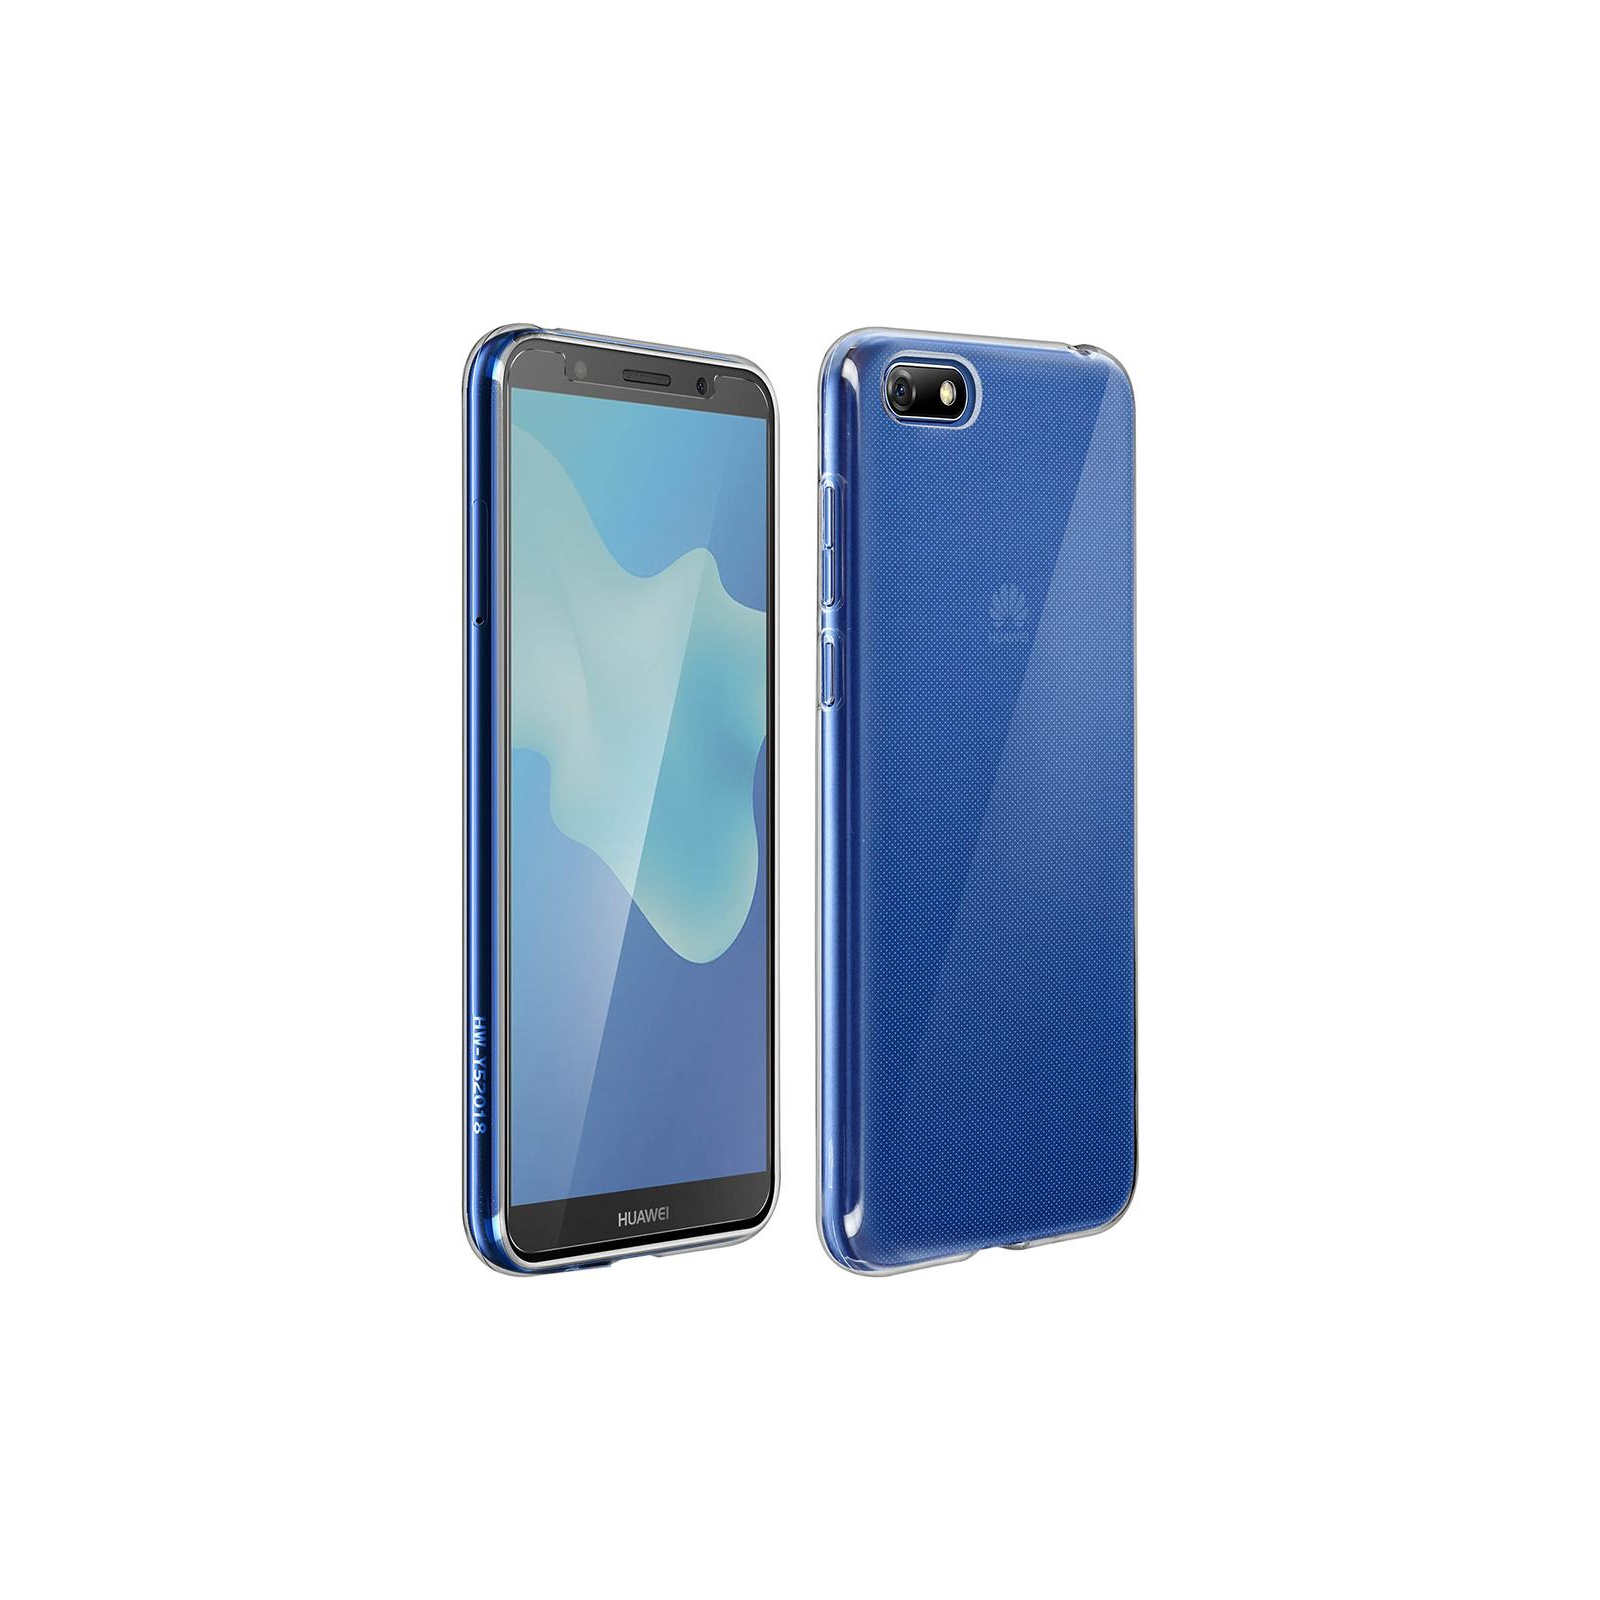 Чехол для мобильного телефона Huawei Y5 2018/Honor 7A Clear tpu (Transperent) Laudtec (LC-HY52018T) изображение 2